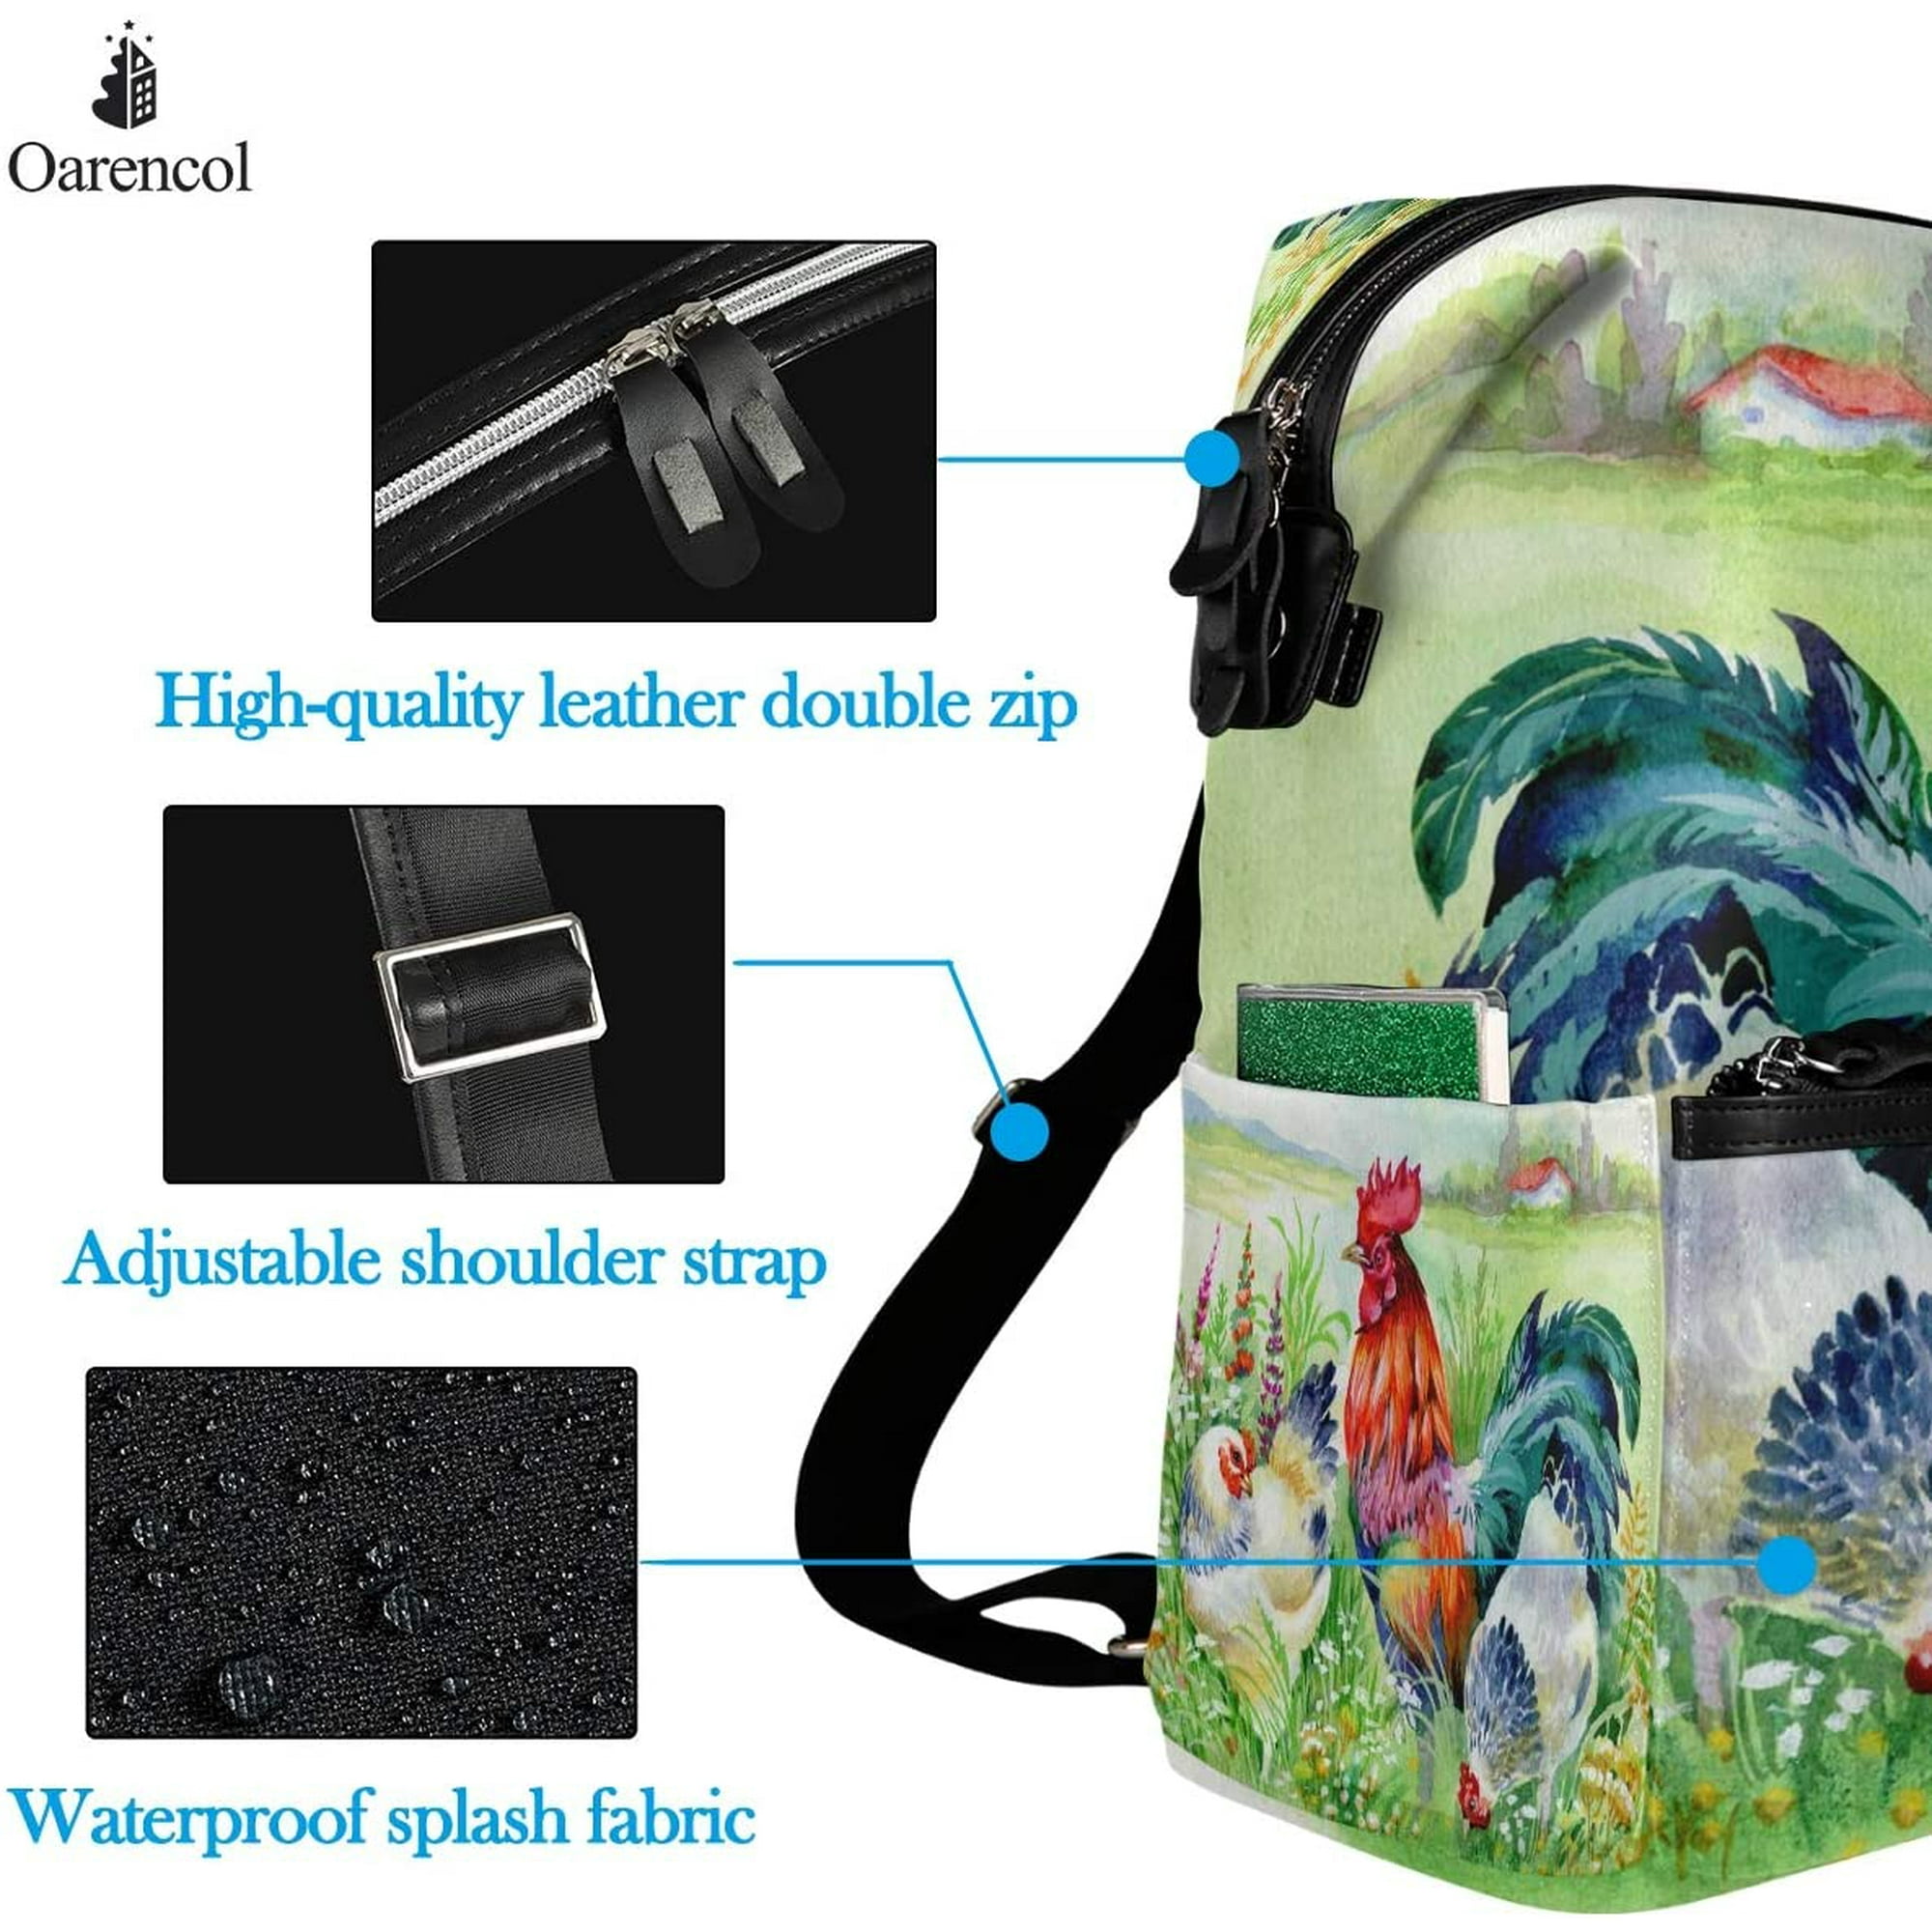 Oarencol Vinatge Rooster Hens Farm Flower Backpack Watercolor Animal Bookbag Daypack Travel Hiking Camping School Laptop Bag 